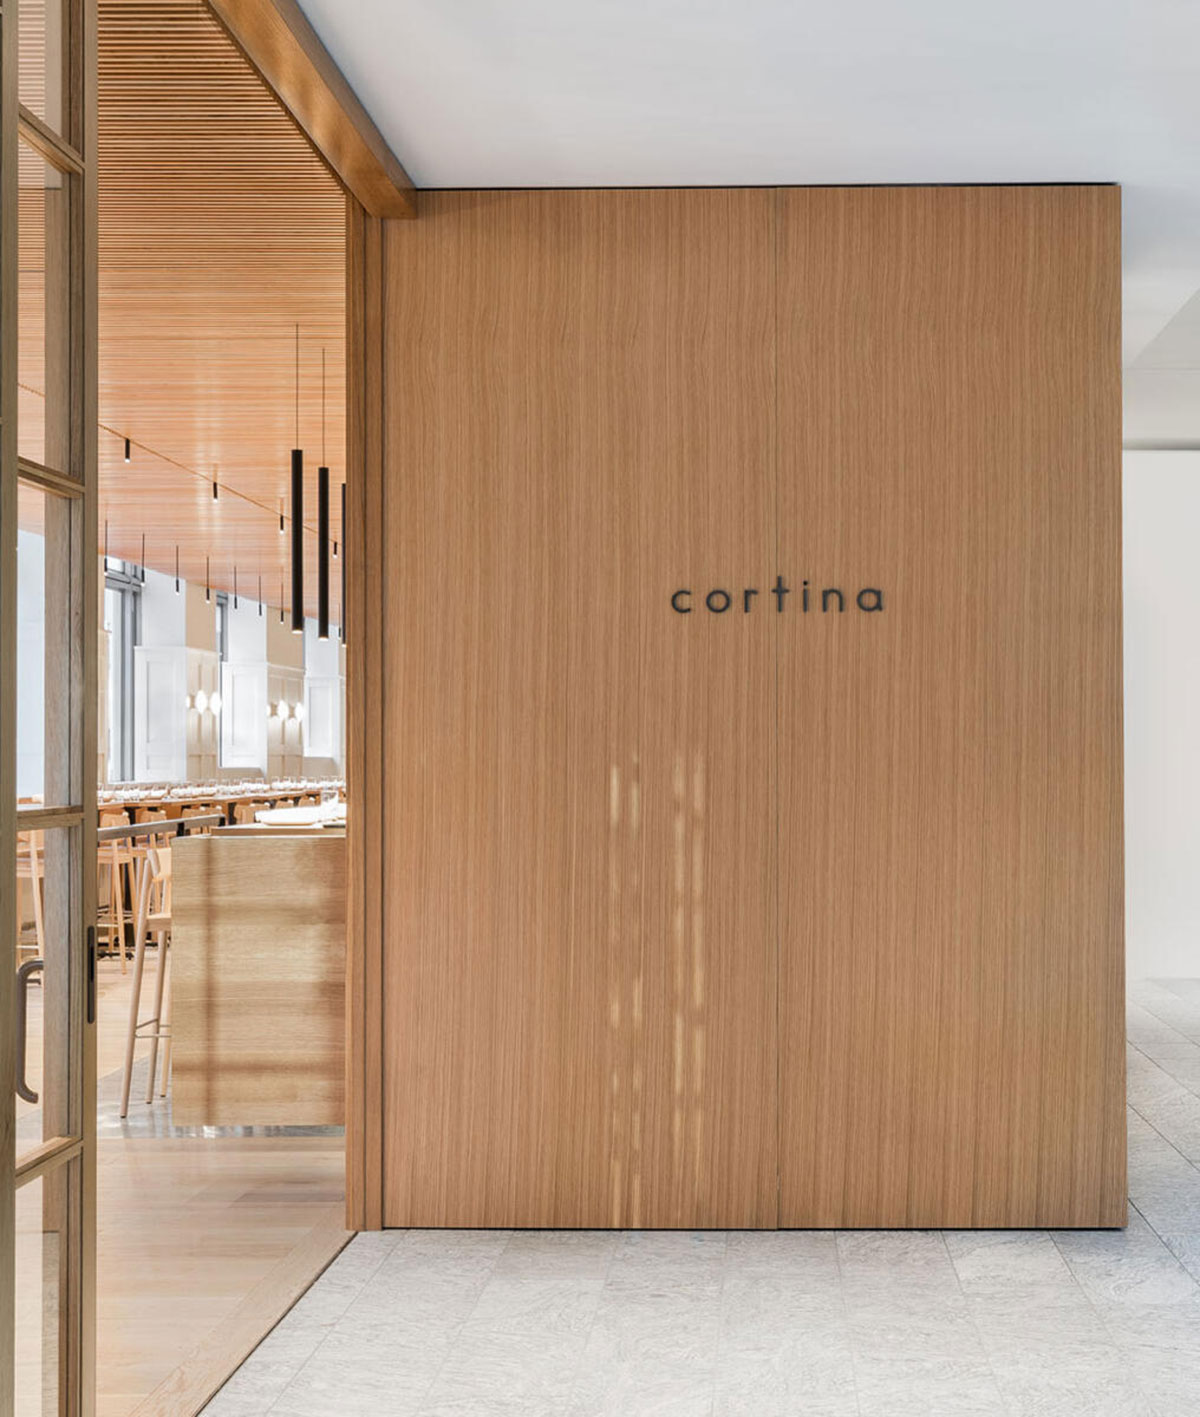 Cortina | Heliotrope Architects